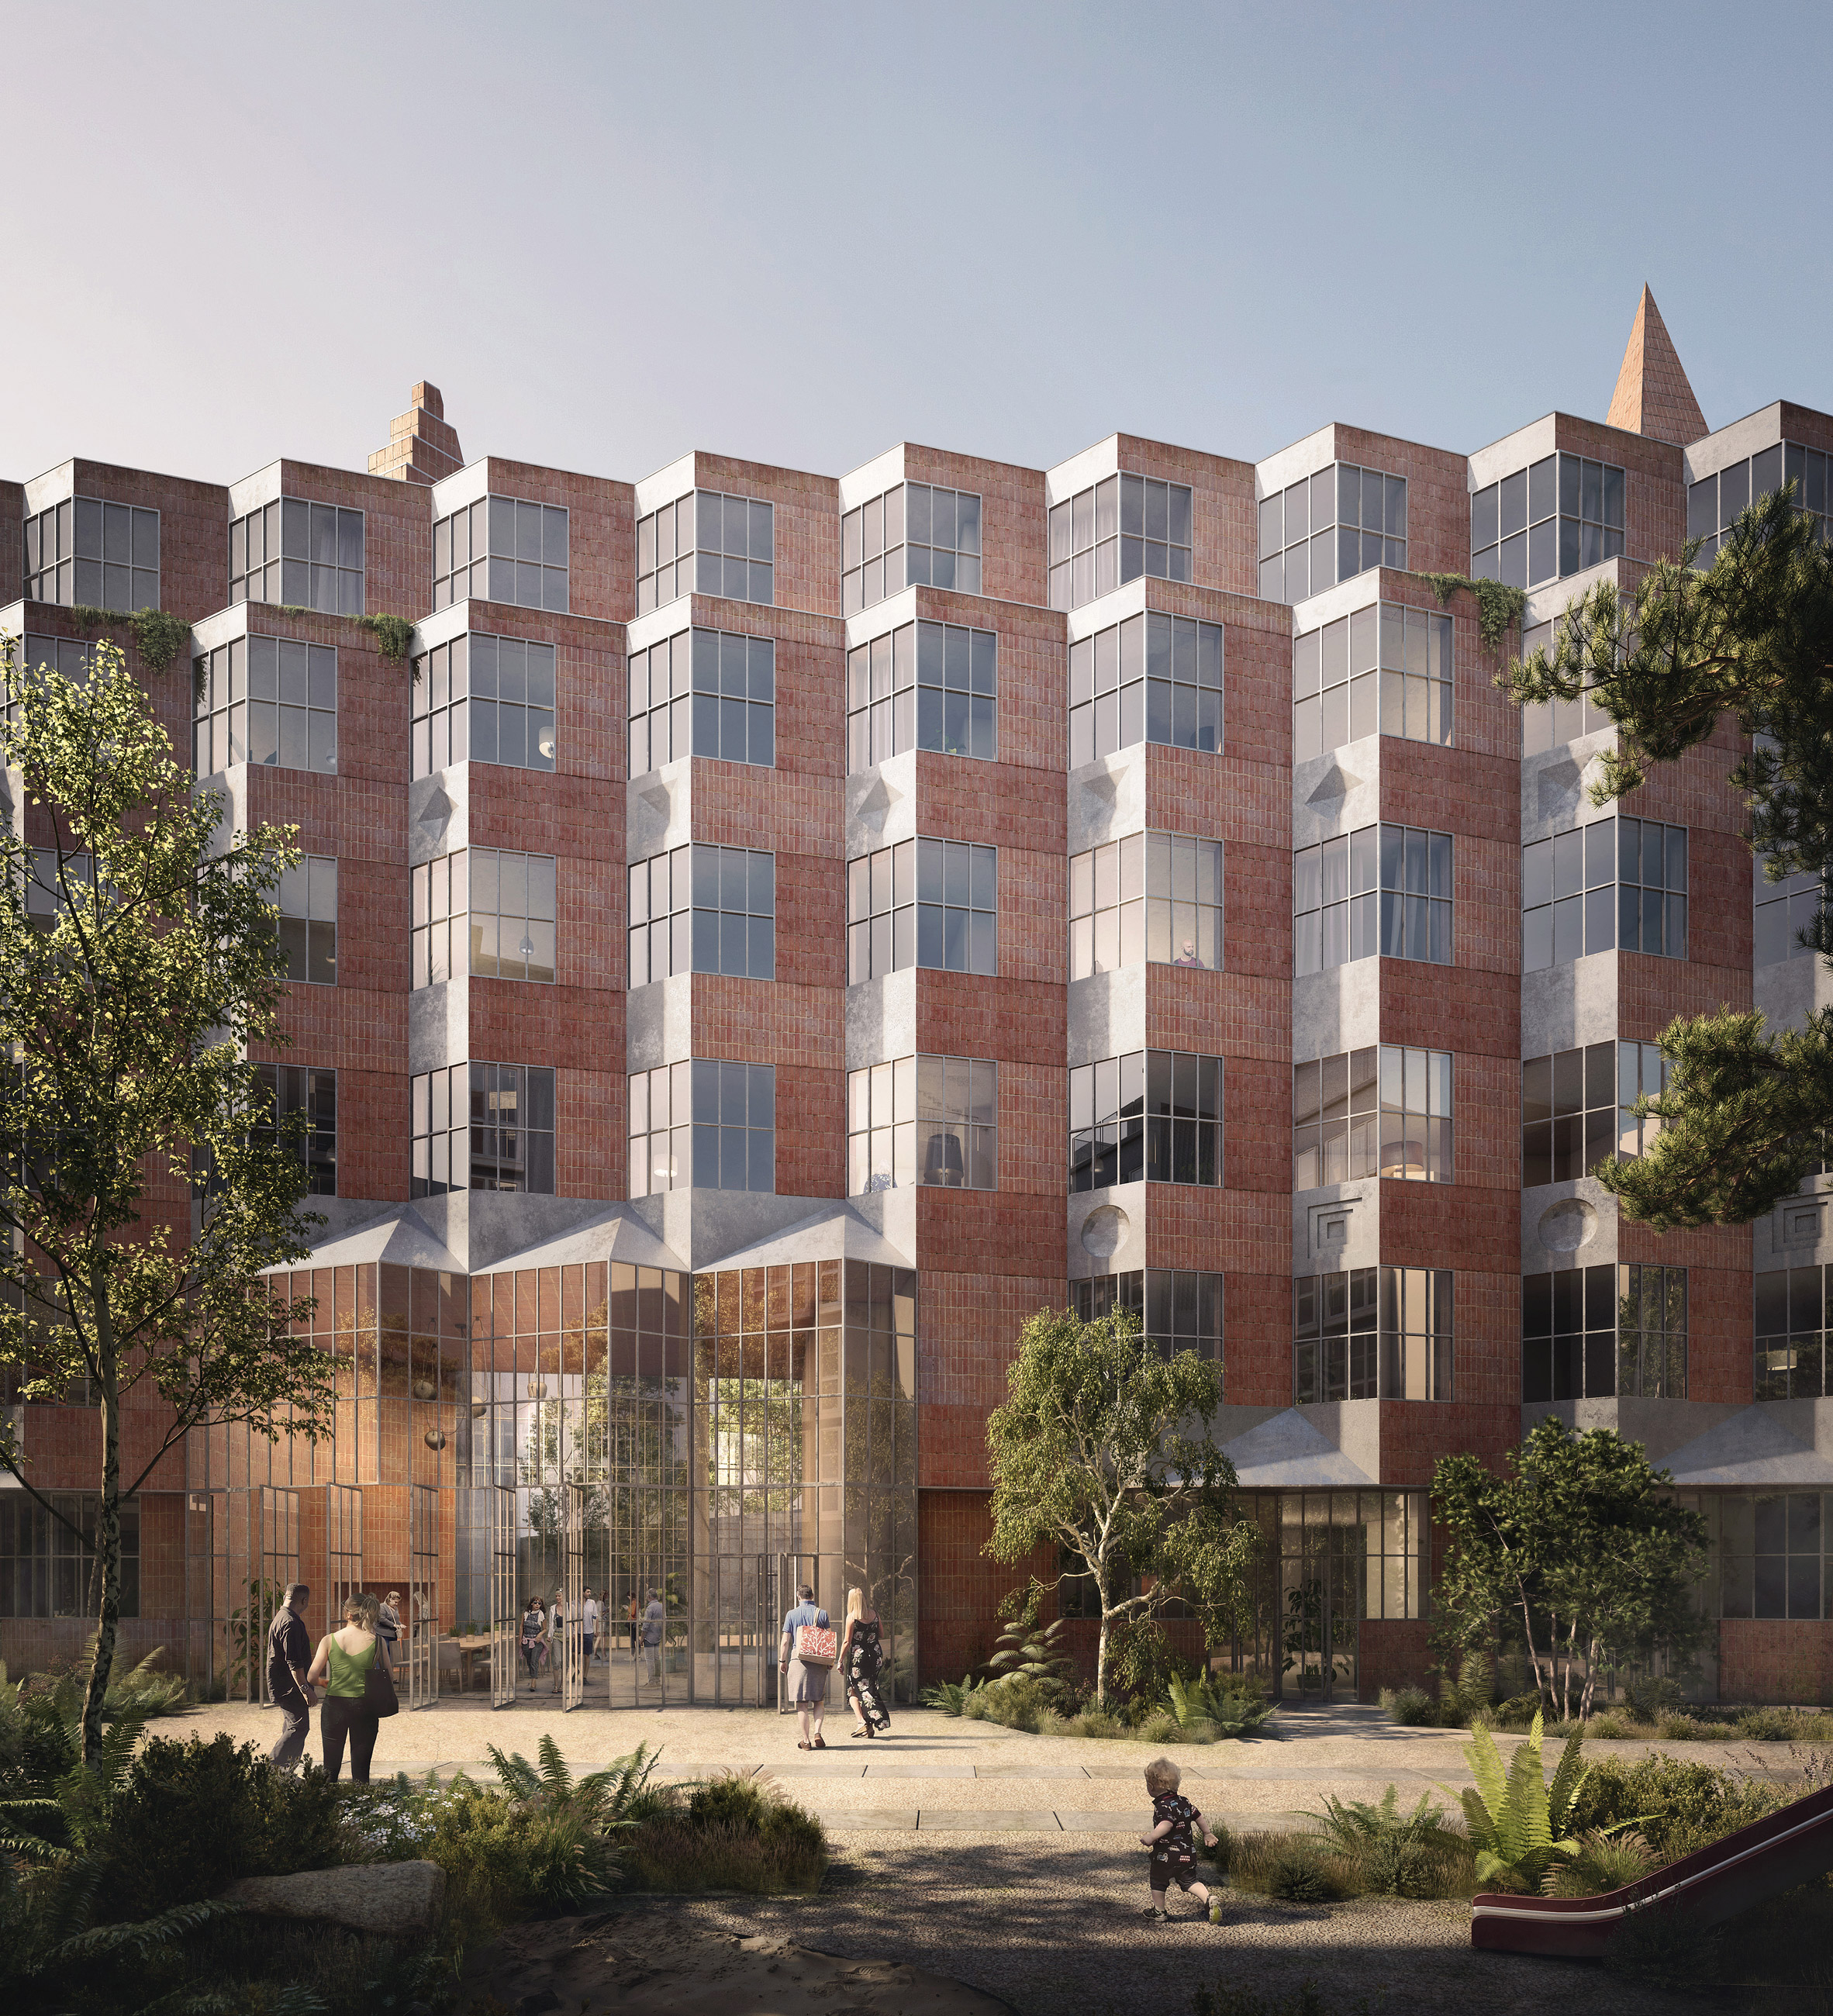 Berlin housing scheme designed with zig-zag facade